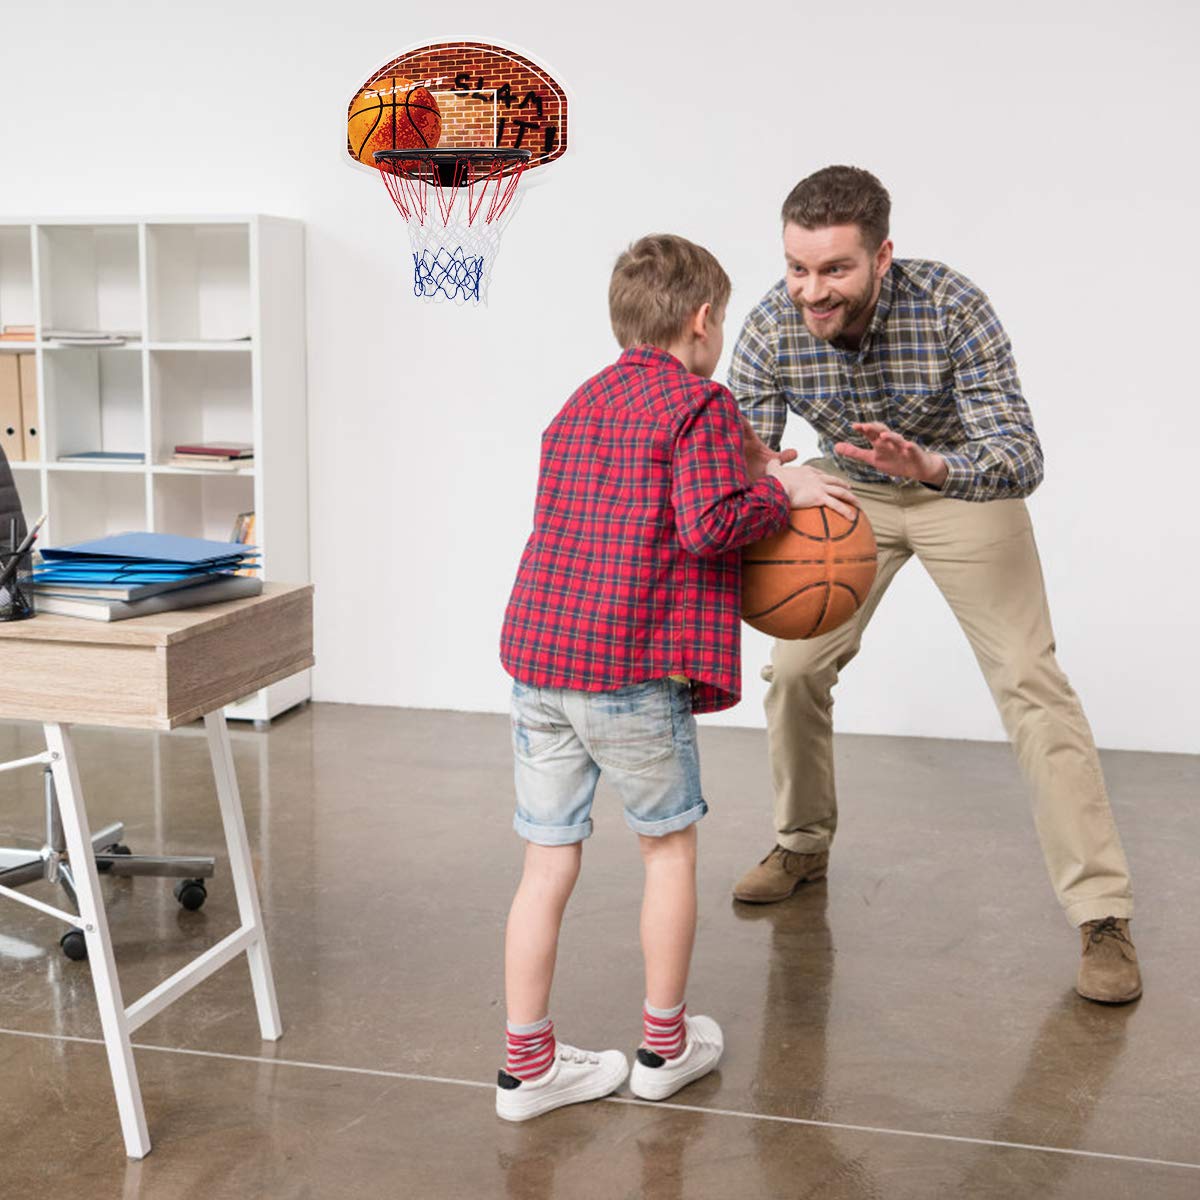 Giantex Basketball Hoop for Door, 29 X 20 Inch Hanging Basketball Board Family Games